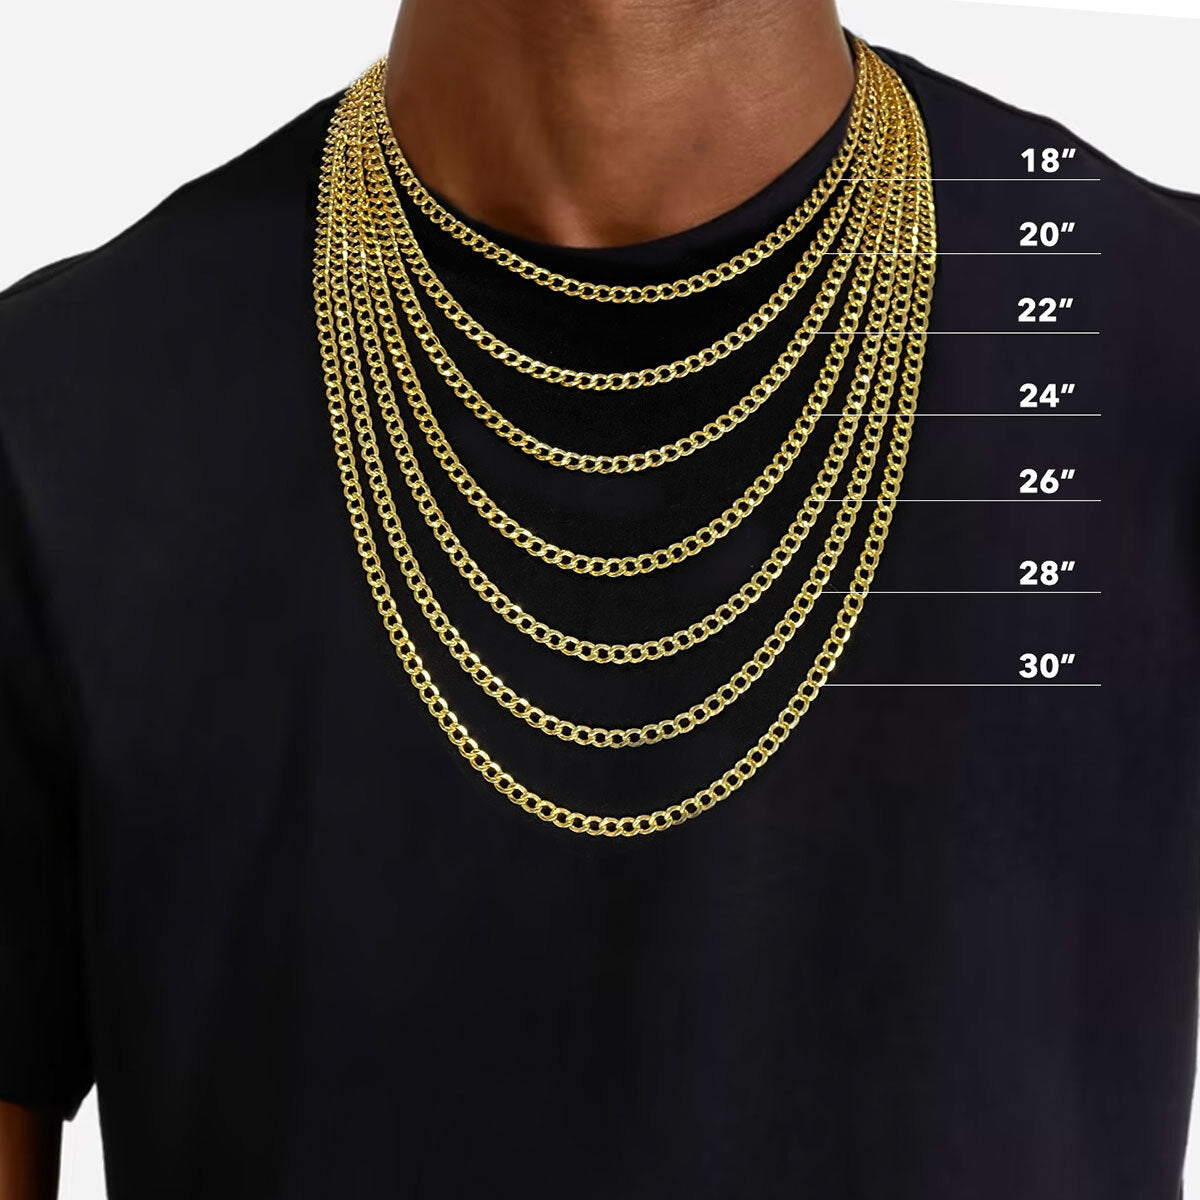 1 3/4" CZ Dallas Cowboys Football Pendant & Chain Necklace Set 10K Yellow Gold